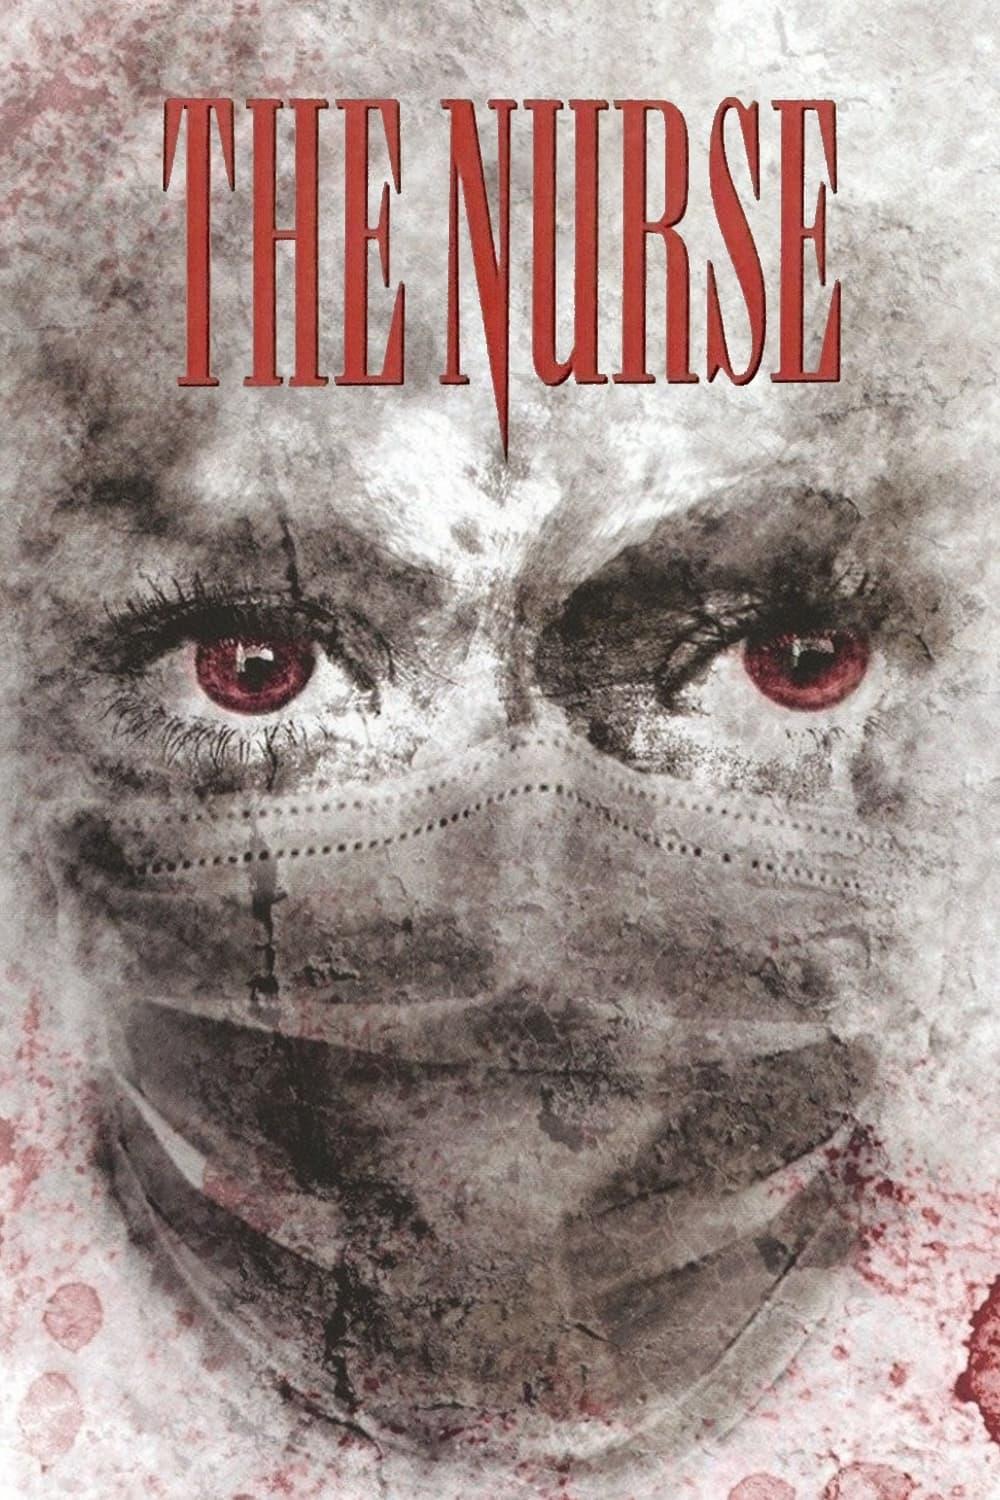 The Nurse poster